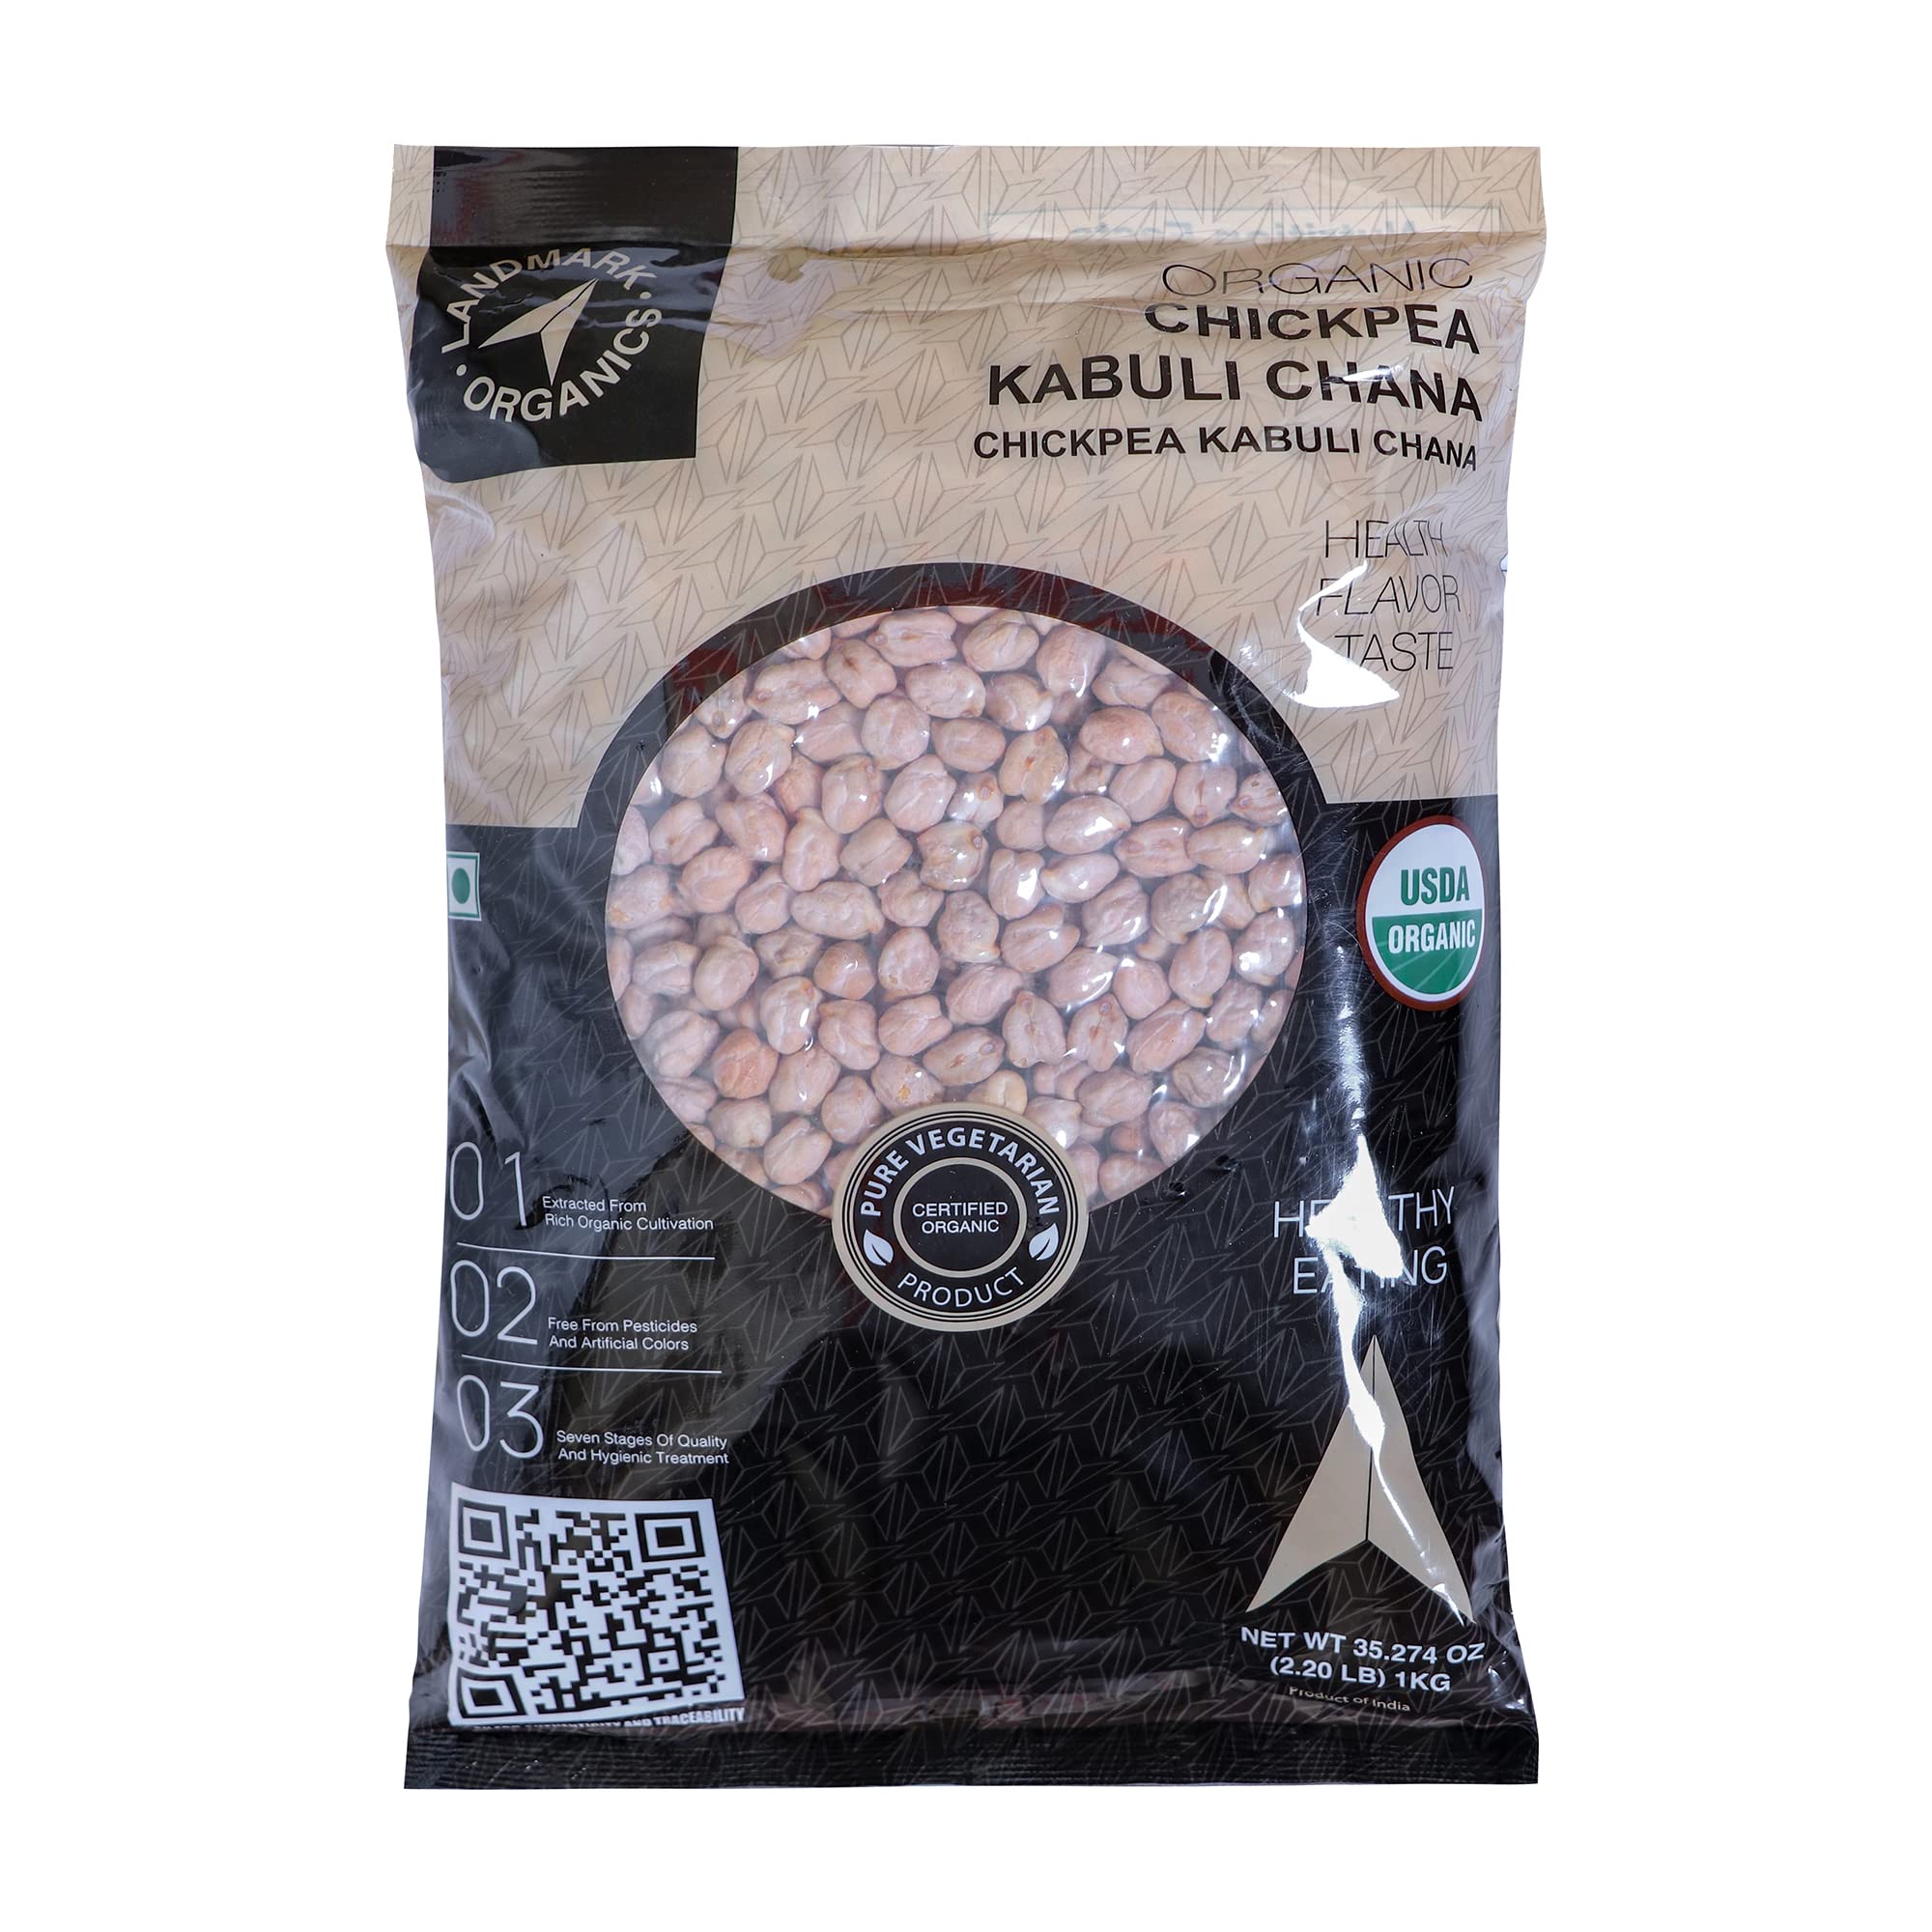 Brown Chetak Premium Chana, 25 Kg, Packaging Type: Bag at Rs 1312.5/bag in  Lucknow